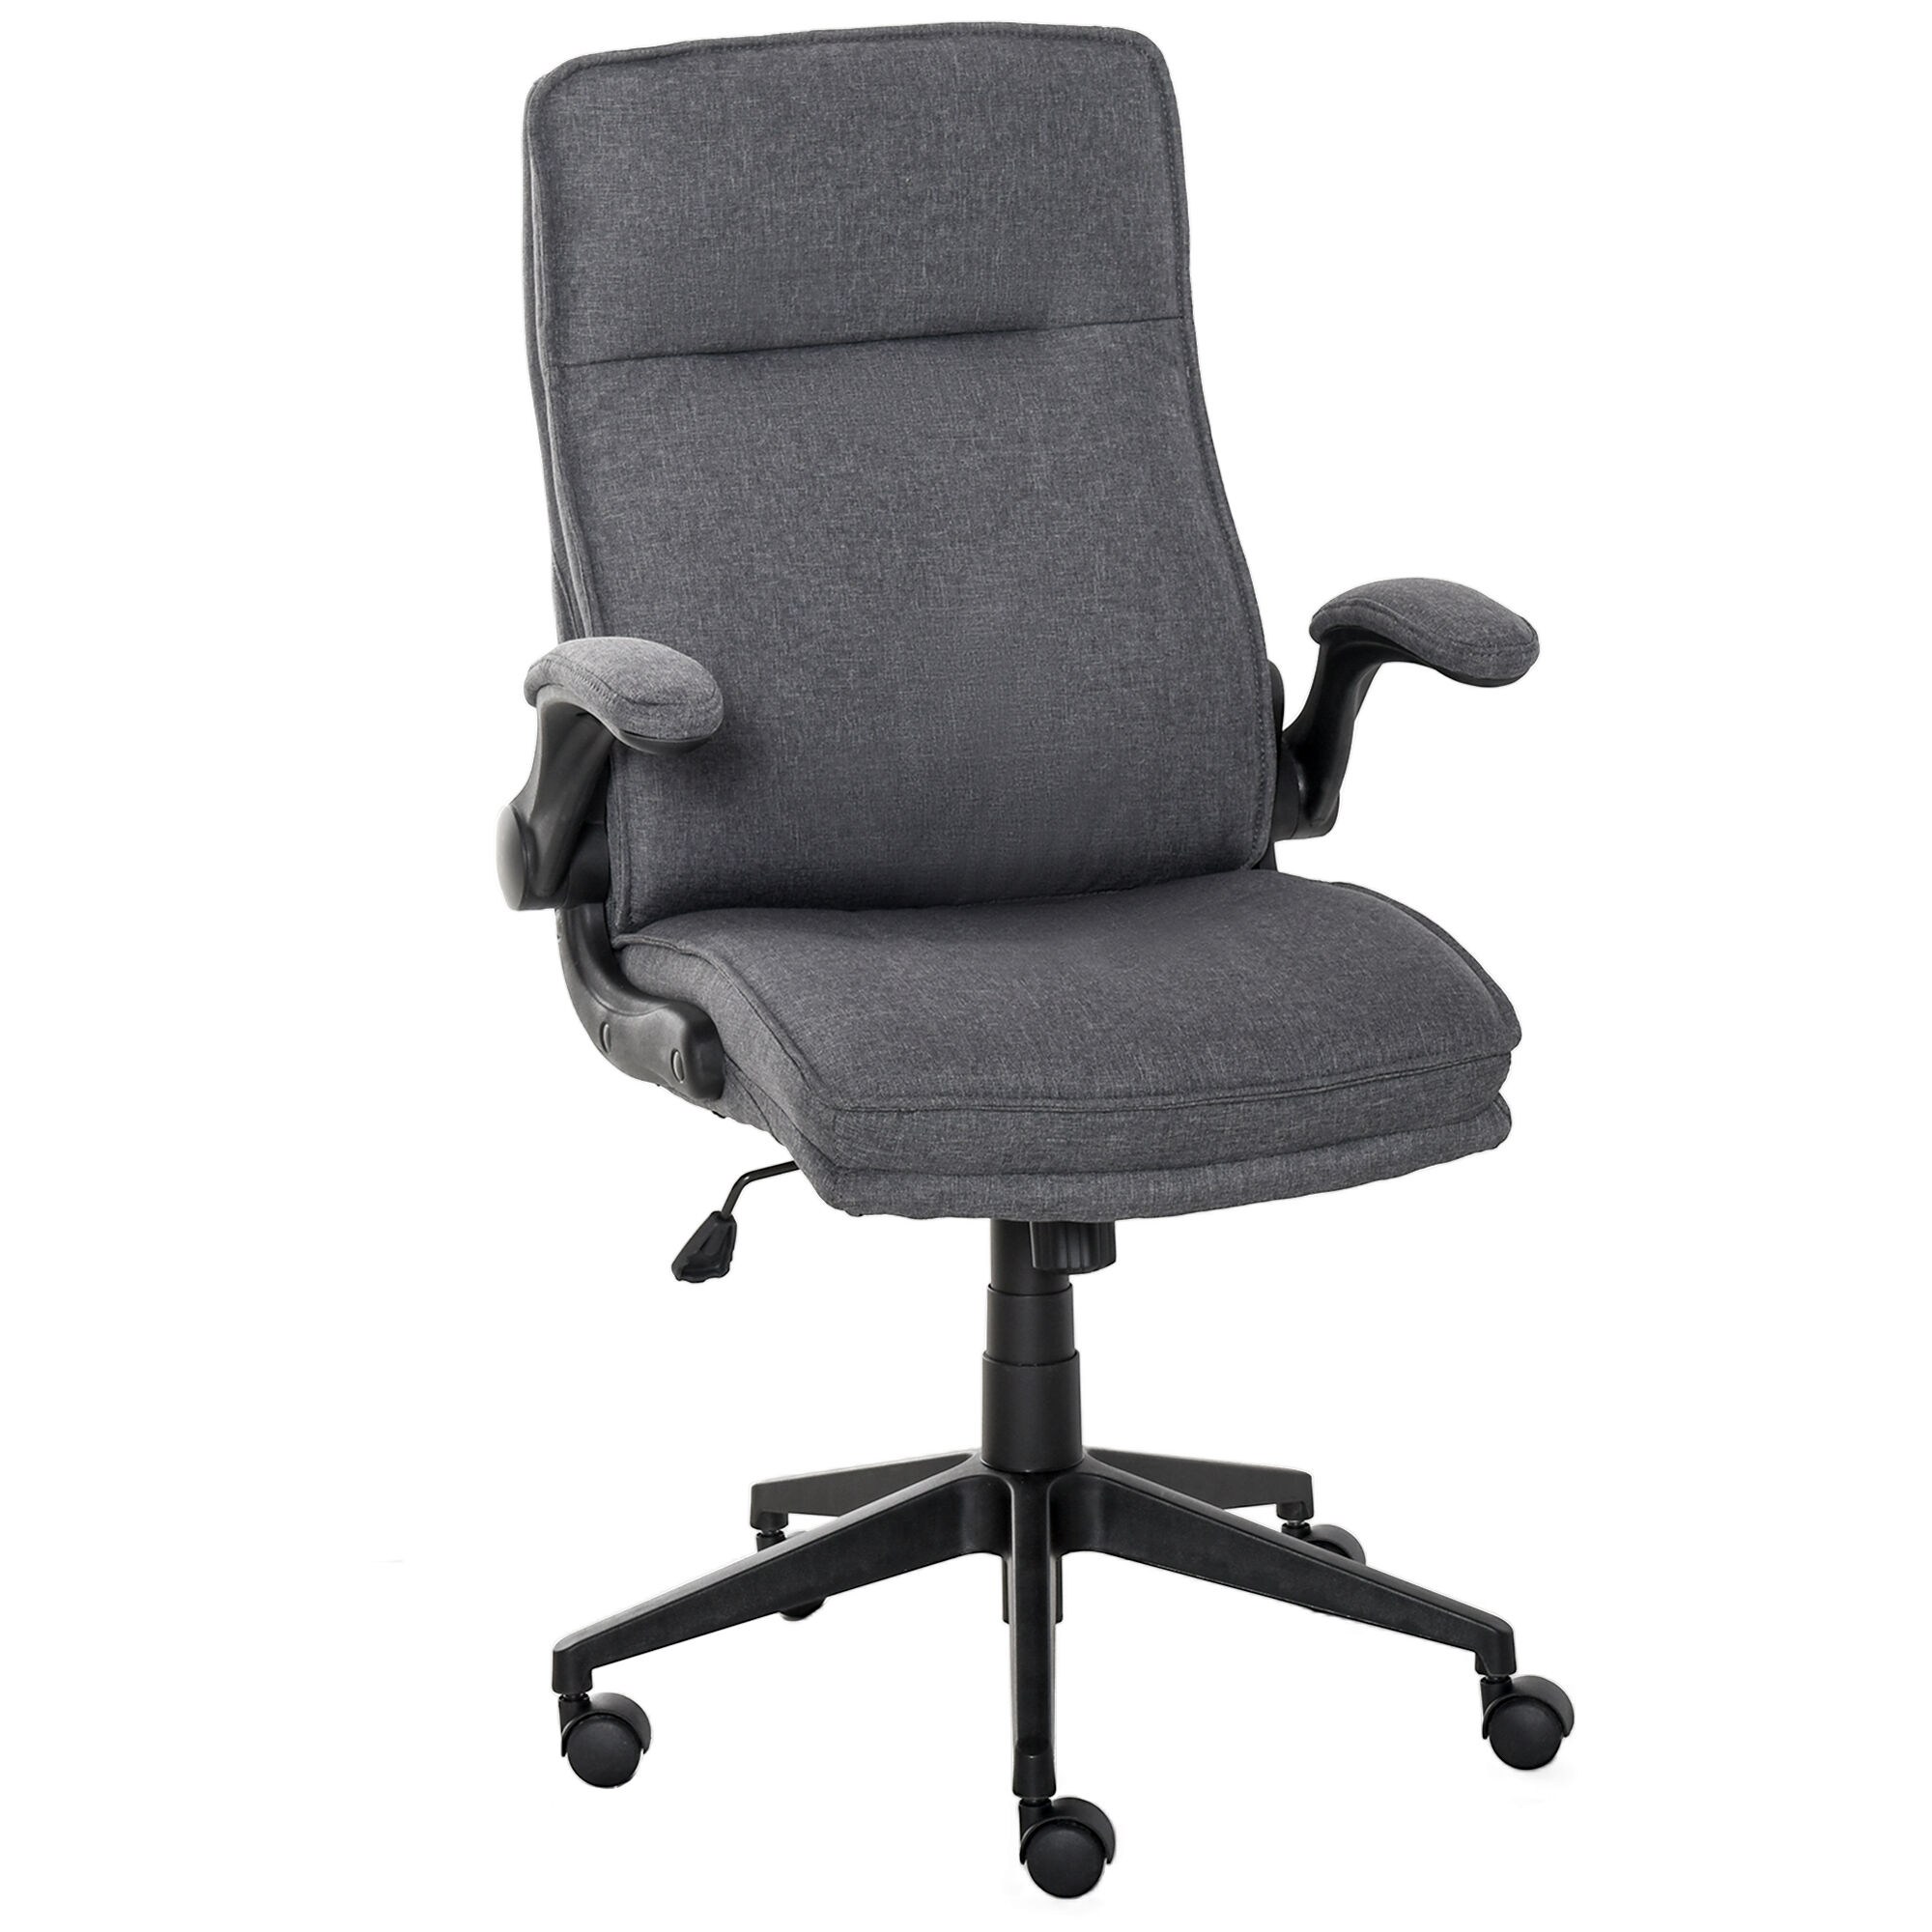 Vinsetto Ergonomic Office Chair, High Back Computer Desk Chair Home Study Rocker with Flip-Up Armrest Wheels Grey